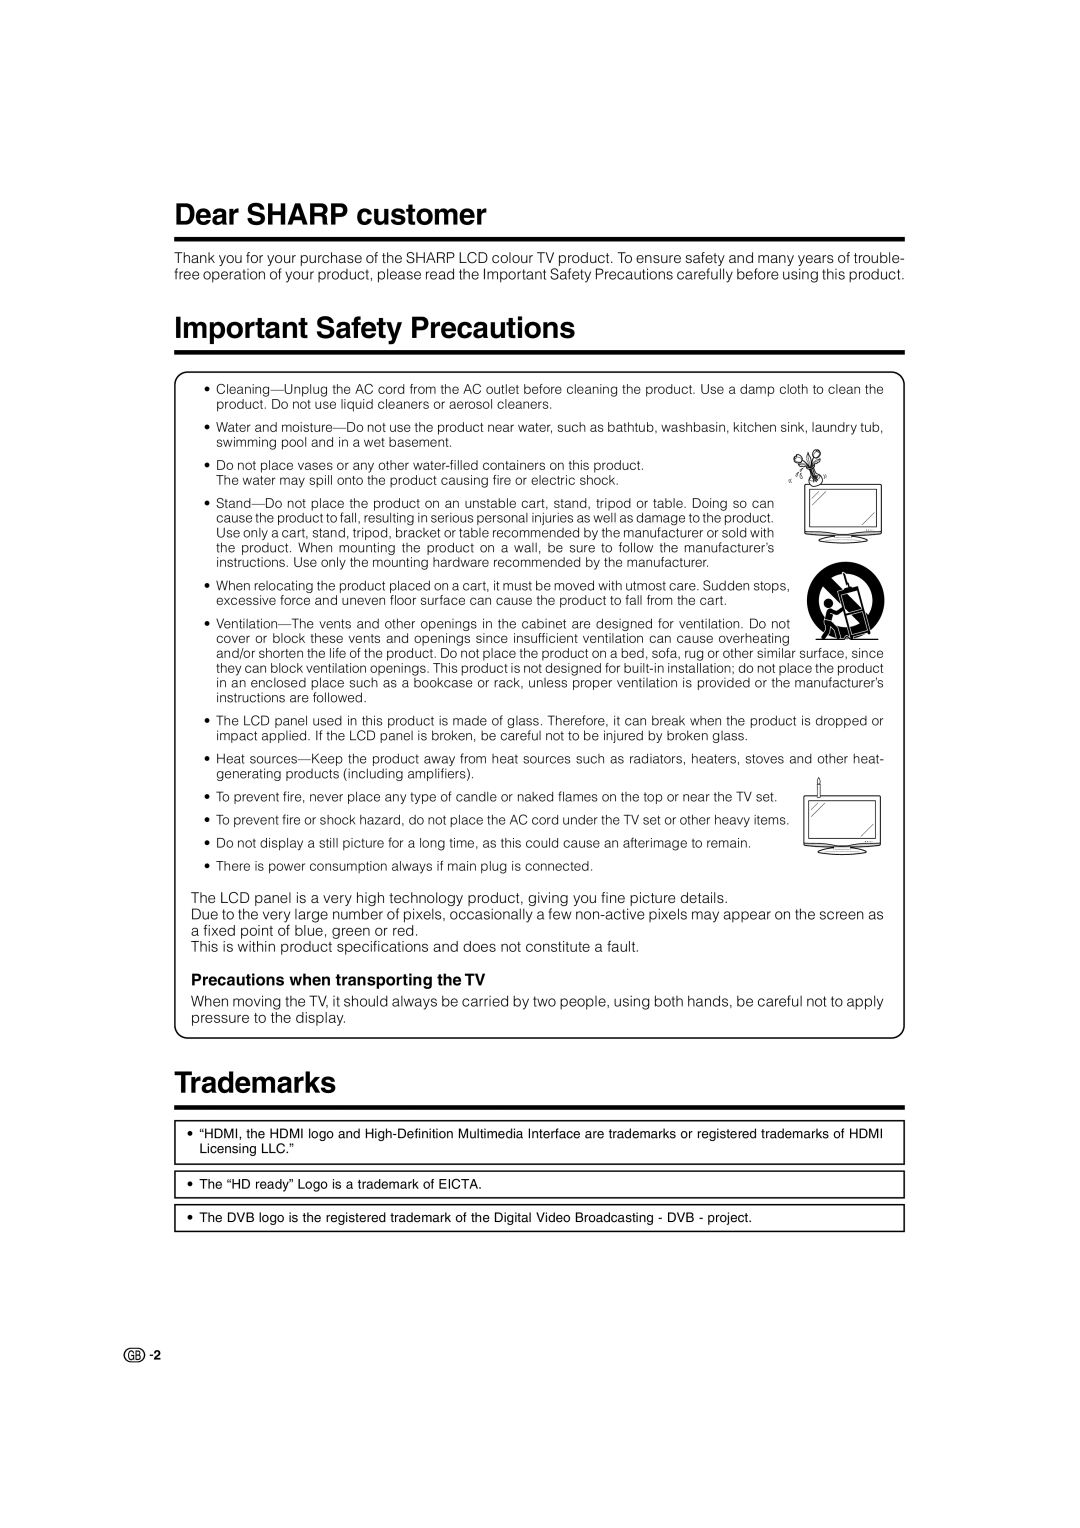 Sharp LC-37AD5S Dear SHARP customer, Important Safety Precautions, Trademarks, Precautions when transporting the TV 